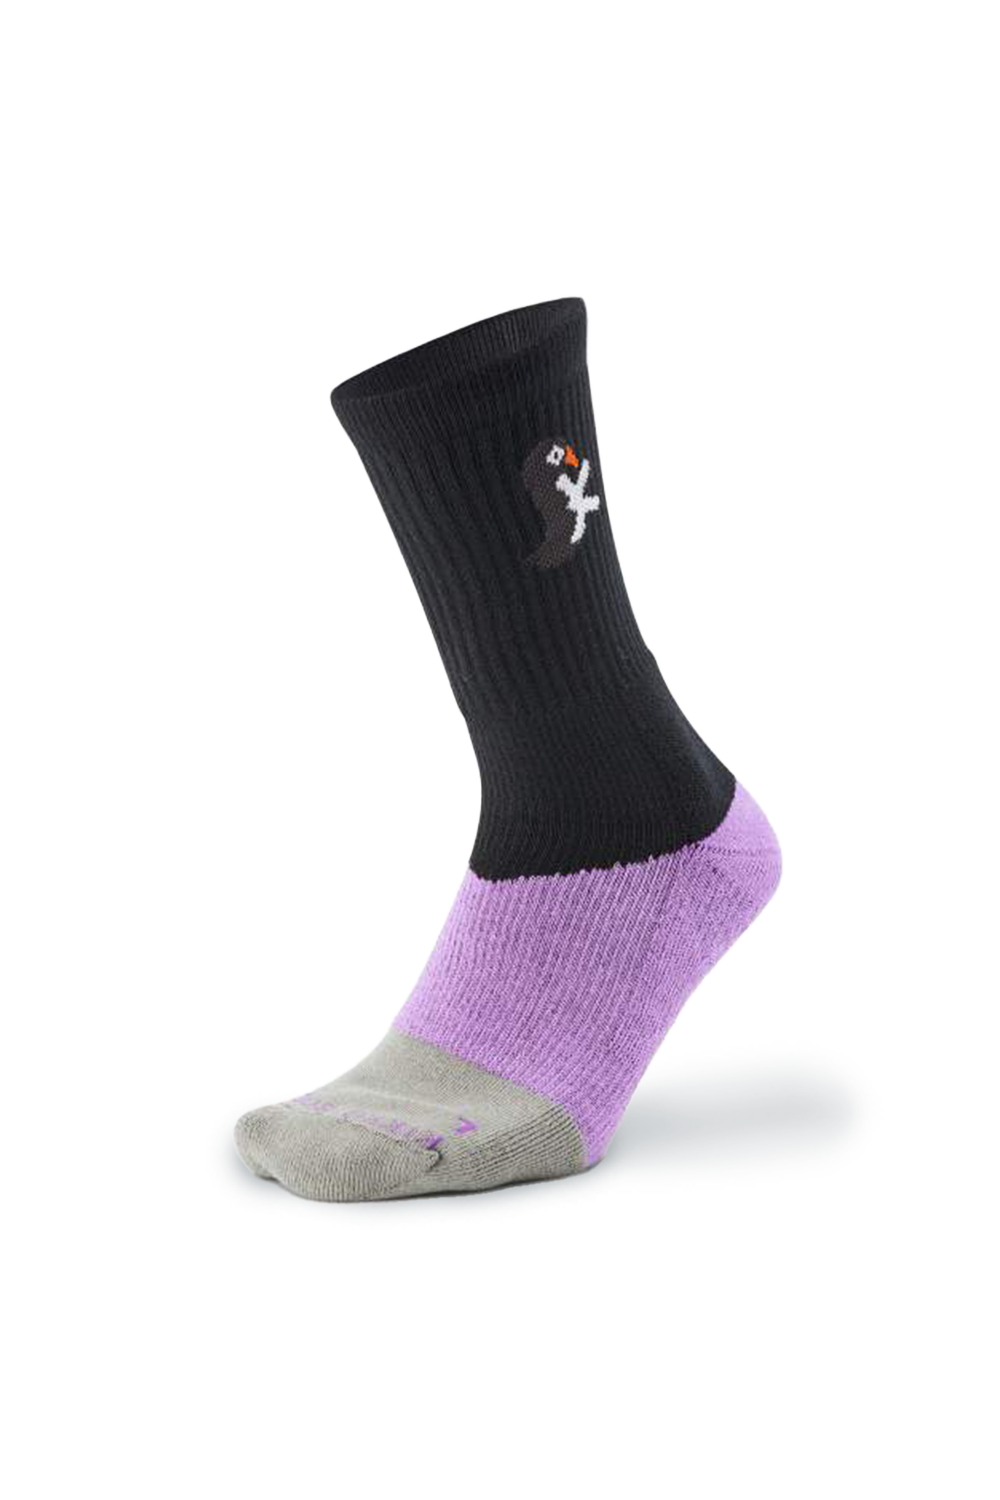 Kikko Socks Athlete Crew II (Lavender Grey)